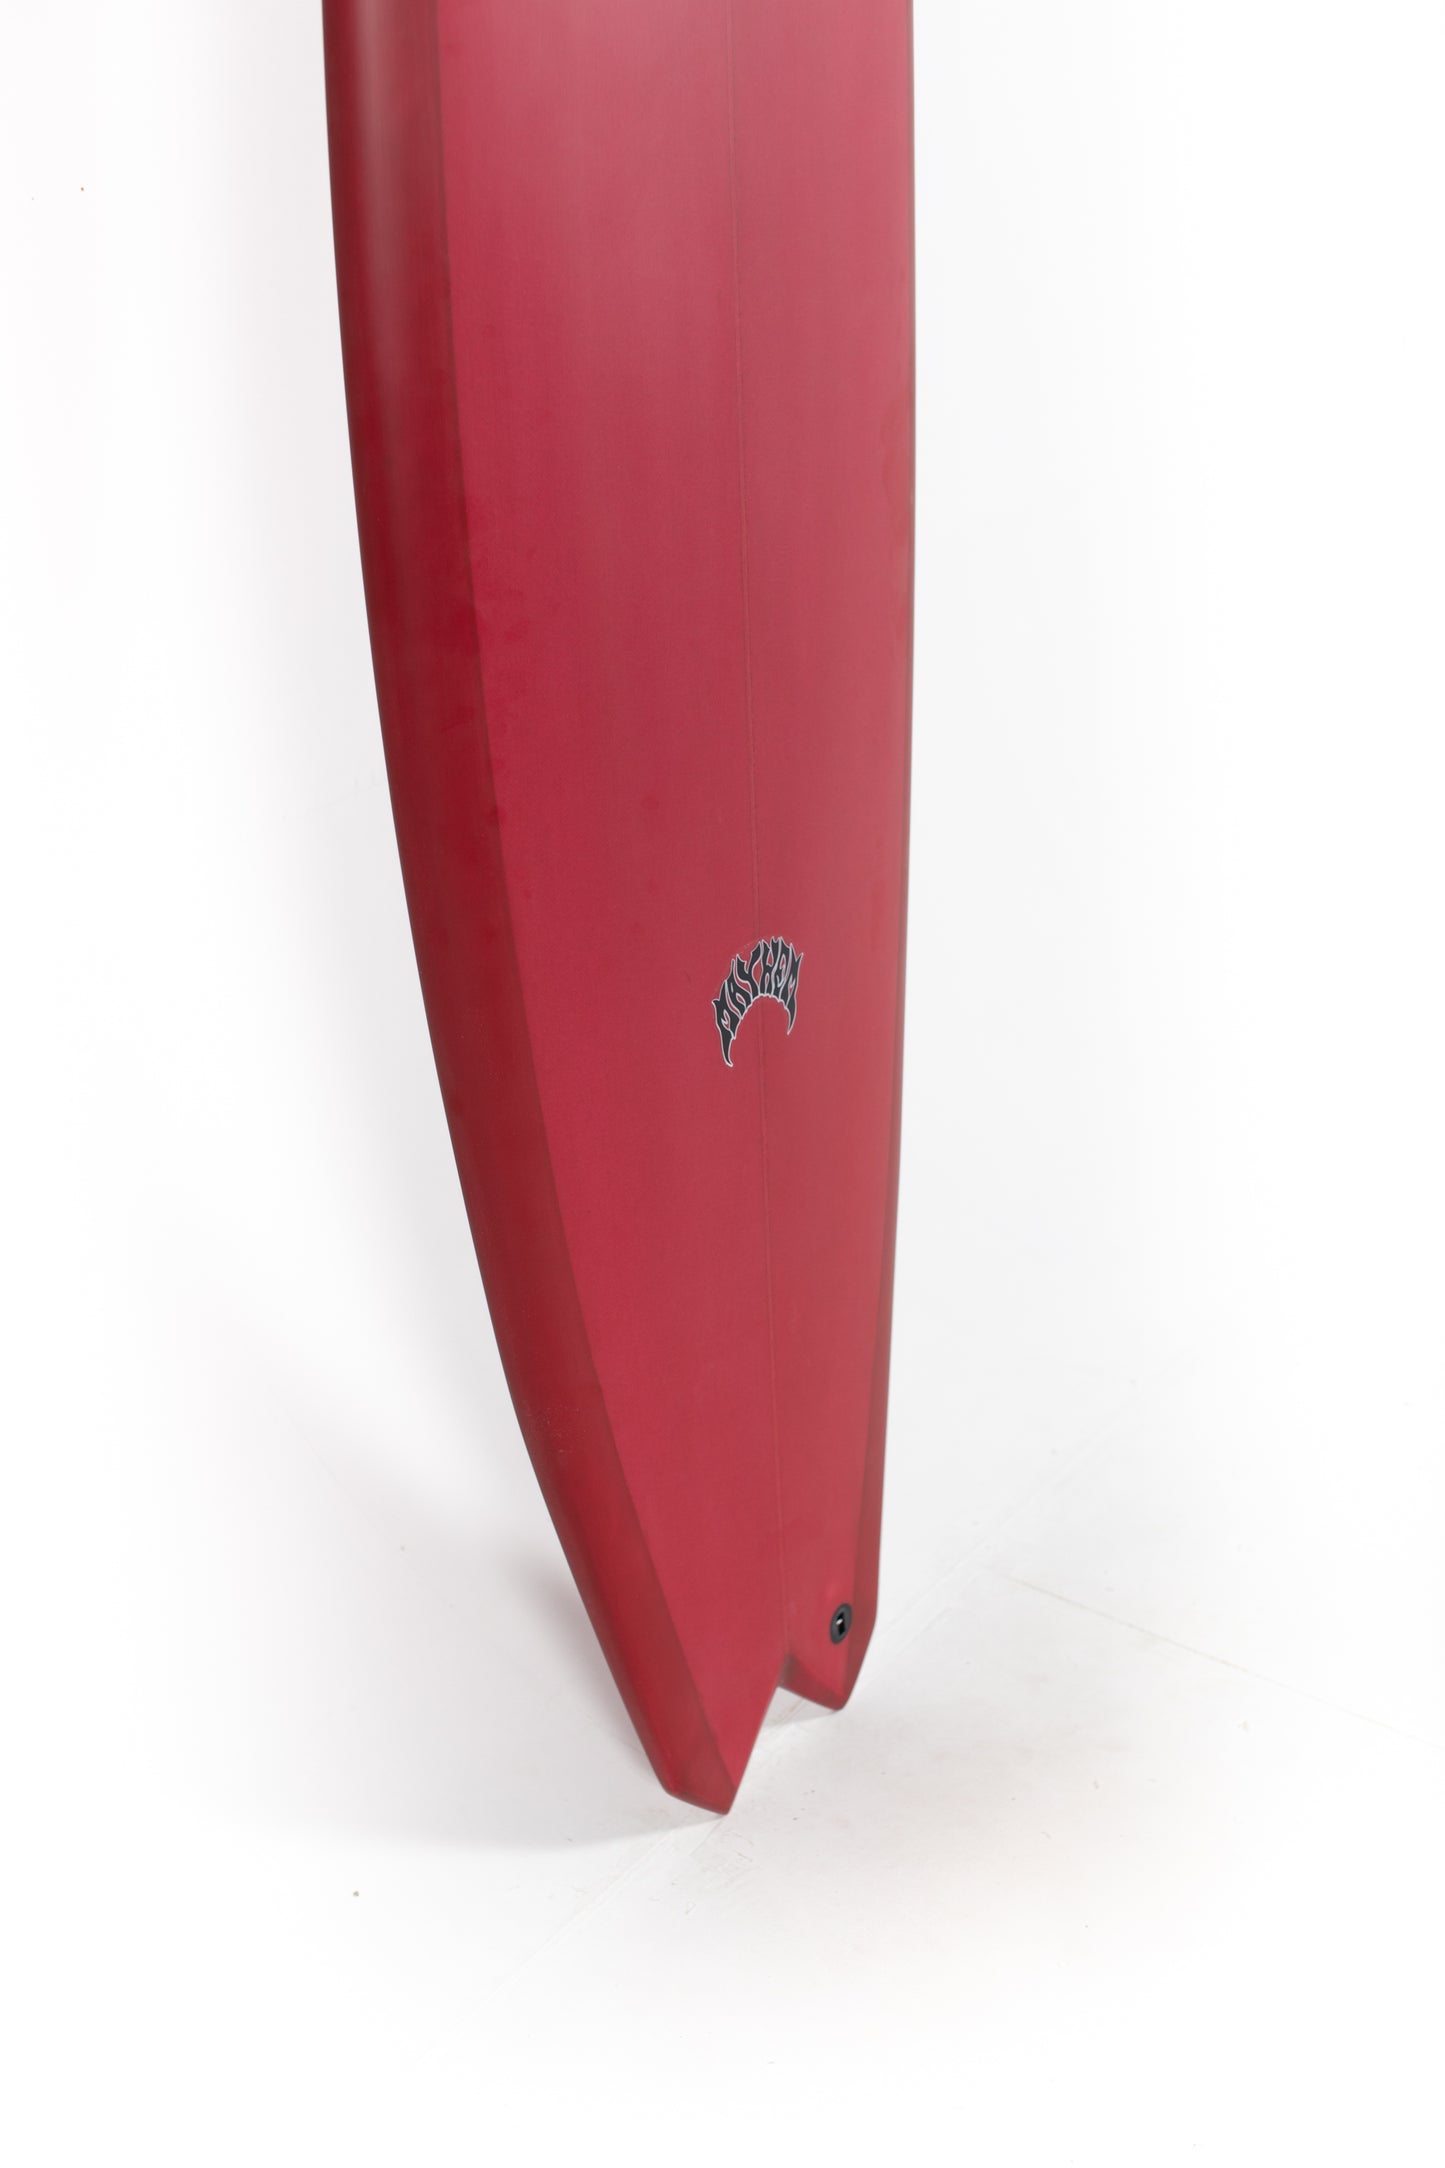 
                  
                    Pukas Surf Shop - Lost Surfboards - GLYDRA by Matt Biolos - 7'0" x 21,75 x 2,88 x 47,5L - MH15170
                  
                